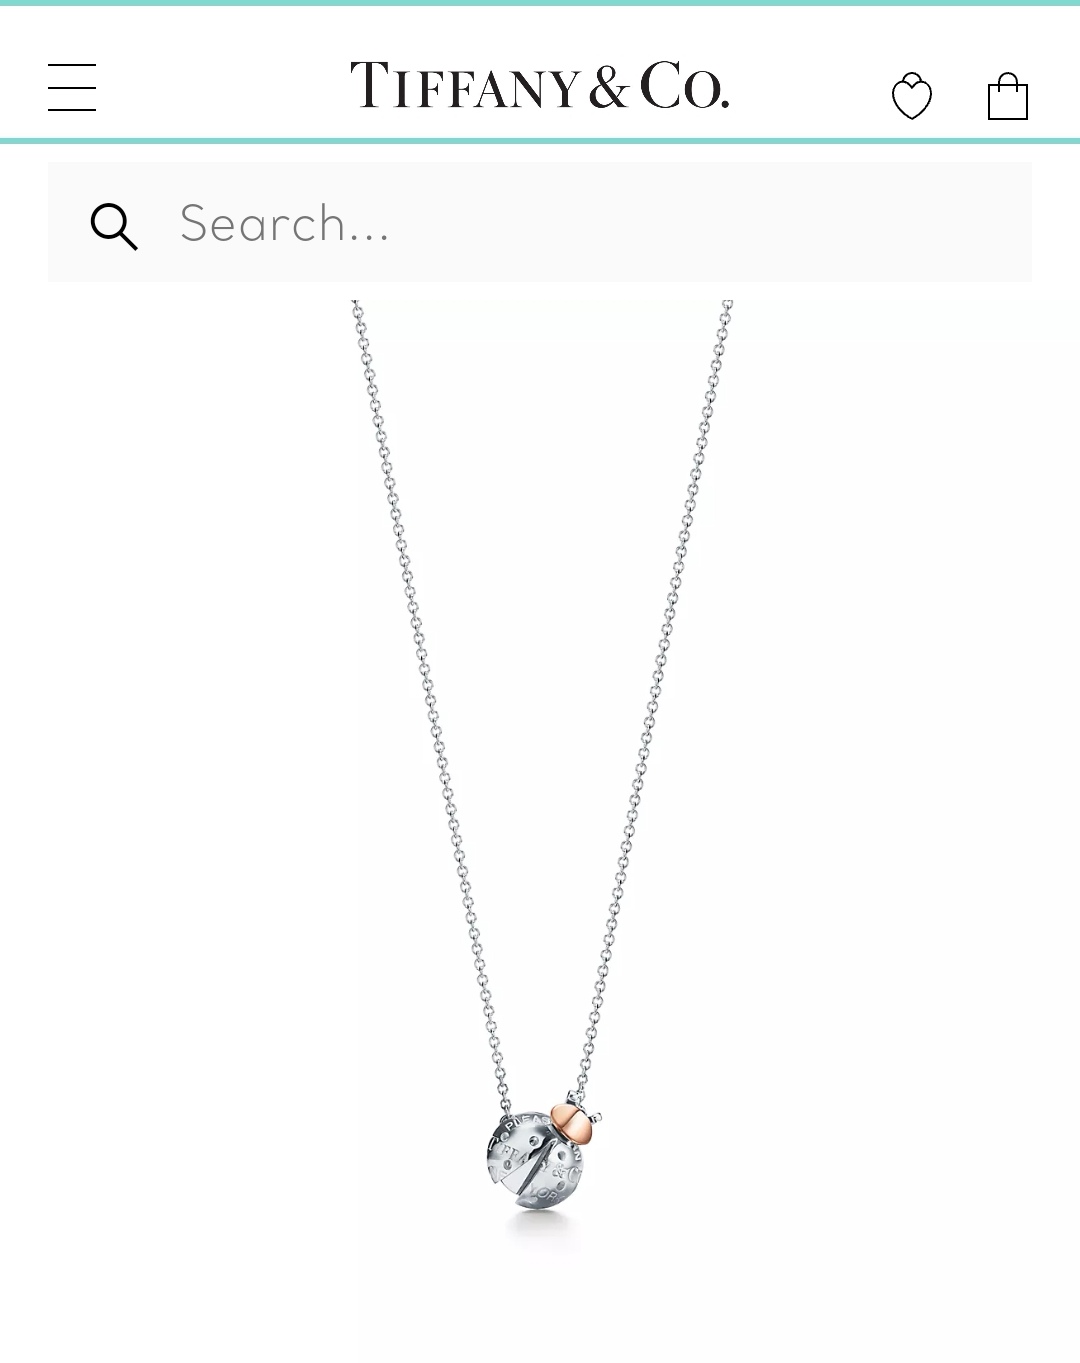 Tiffany & co necklace